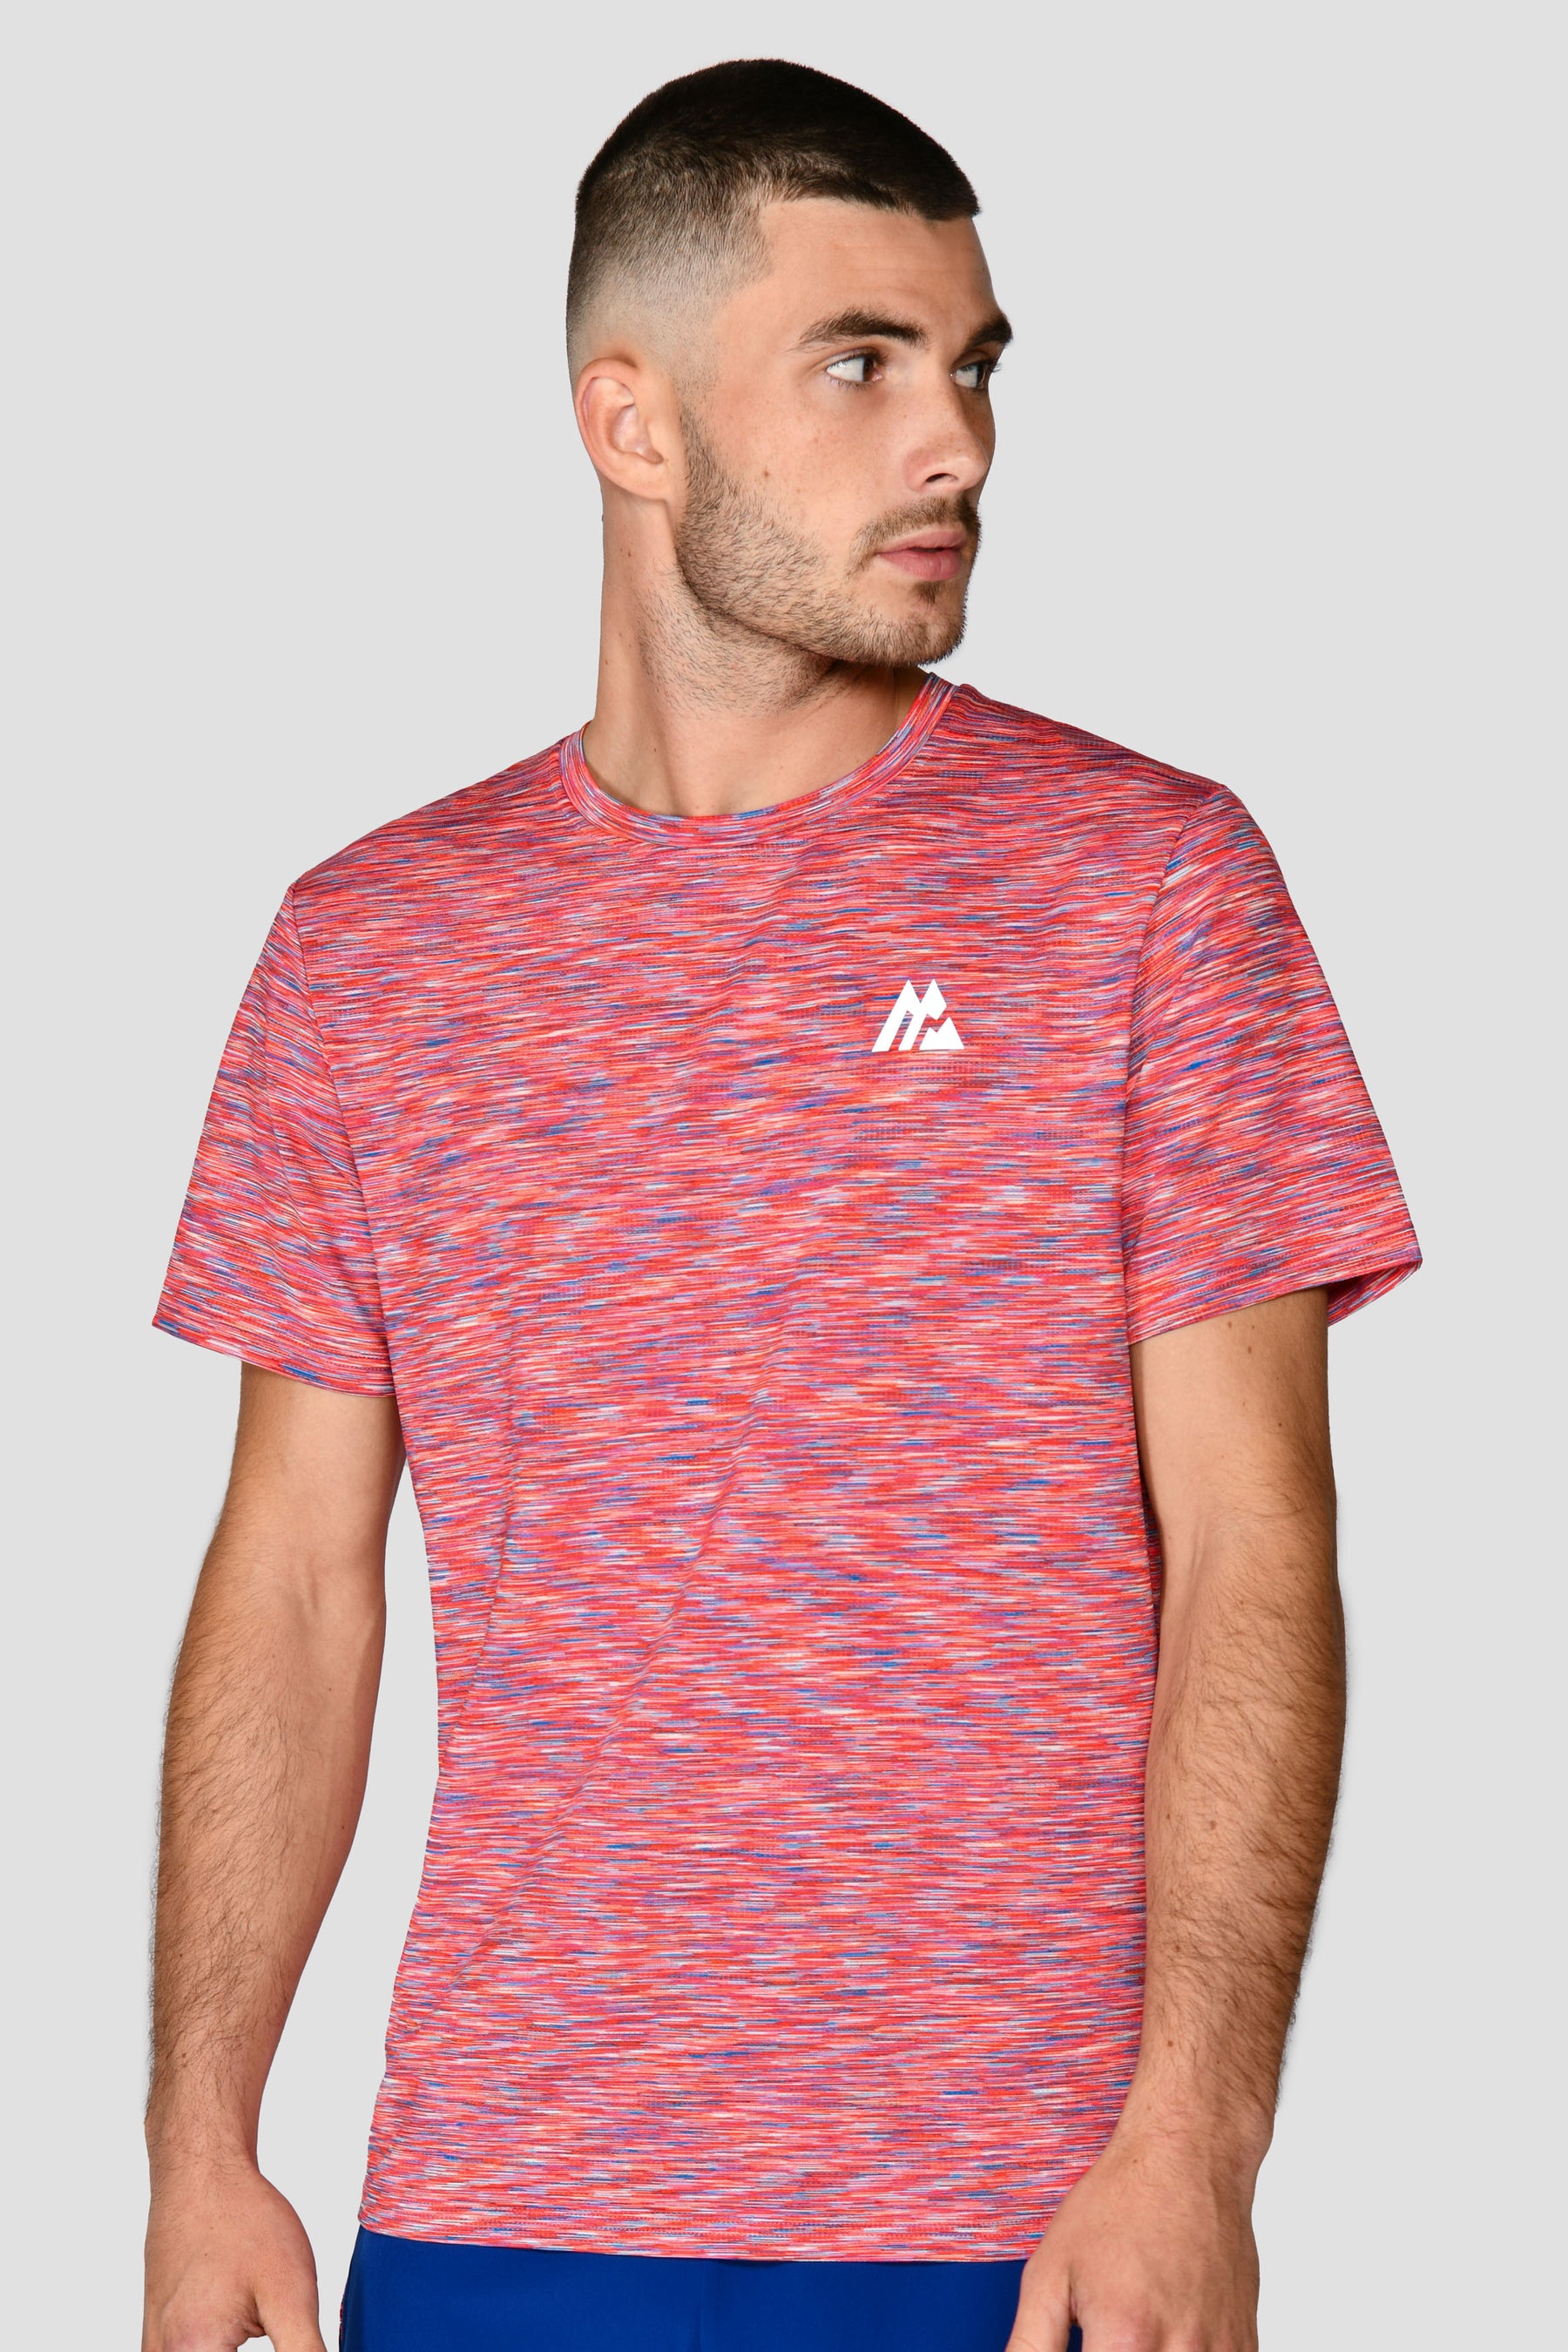 Trail 2.0 T-Shirt - Shocking Pink/Neon Blue Multi